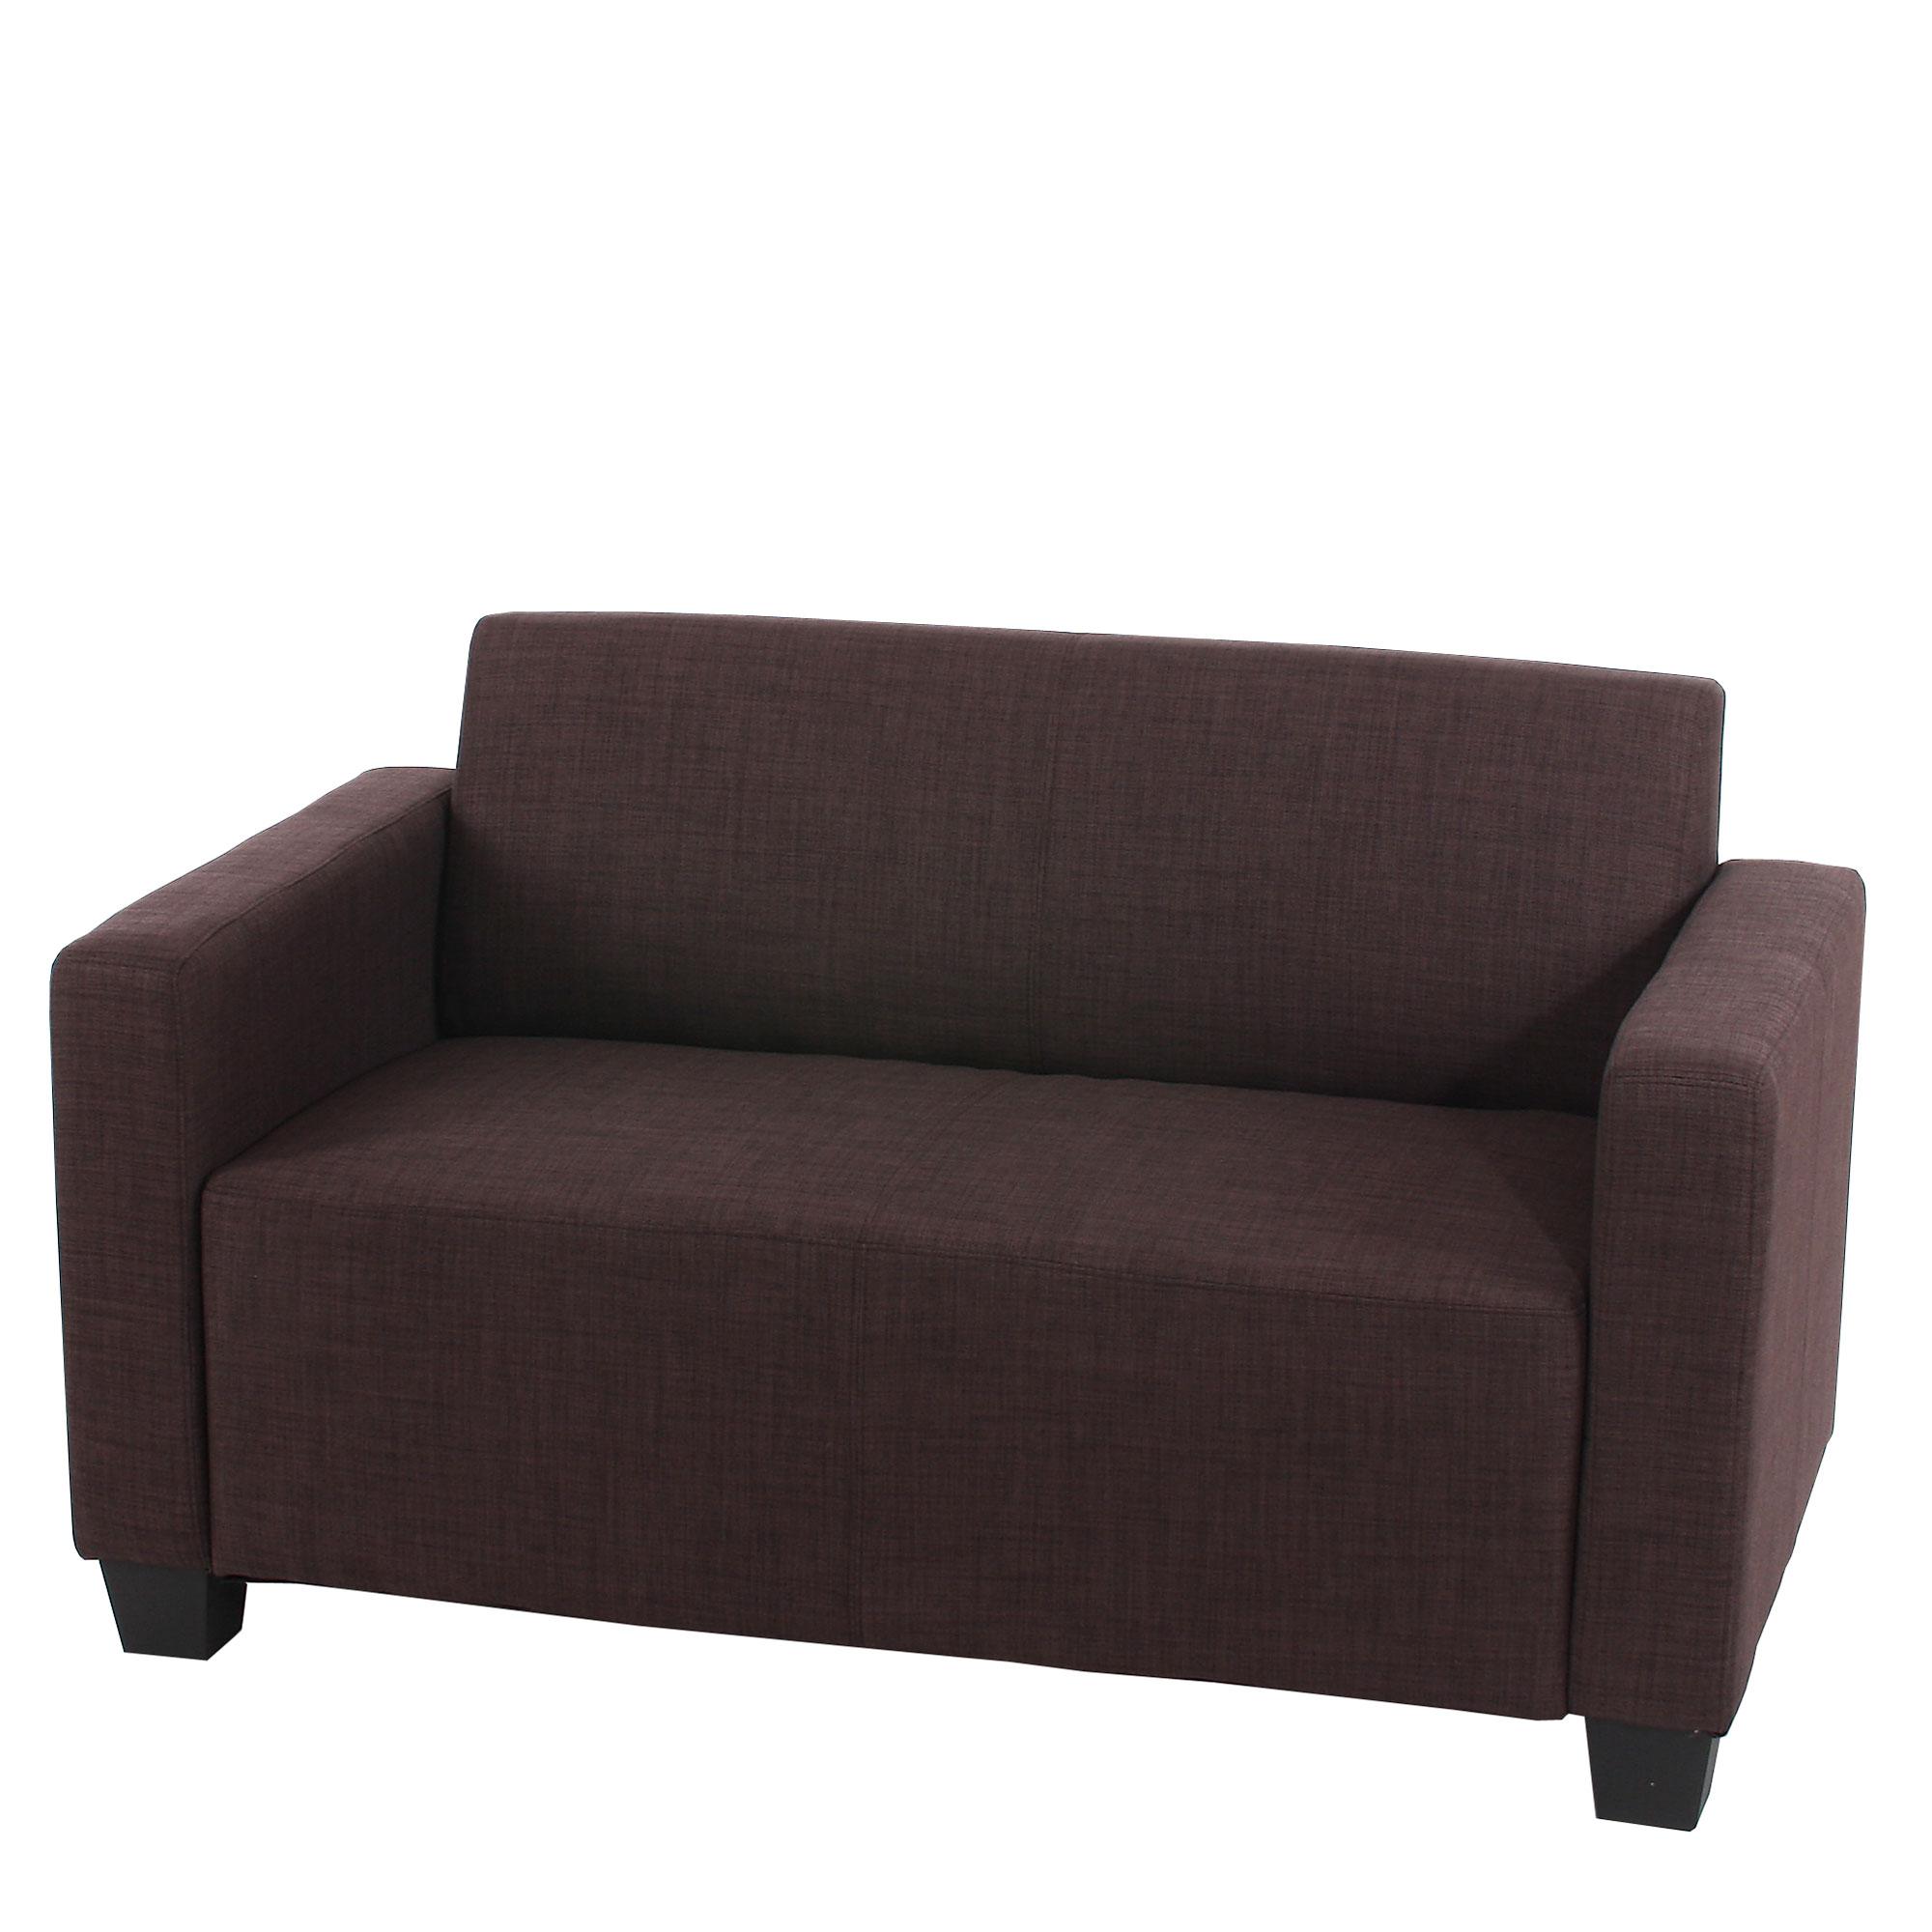 Sessel LYON, 2 Sitzer, elegantes Design, sehr bequem, Leder, Farbe Braun